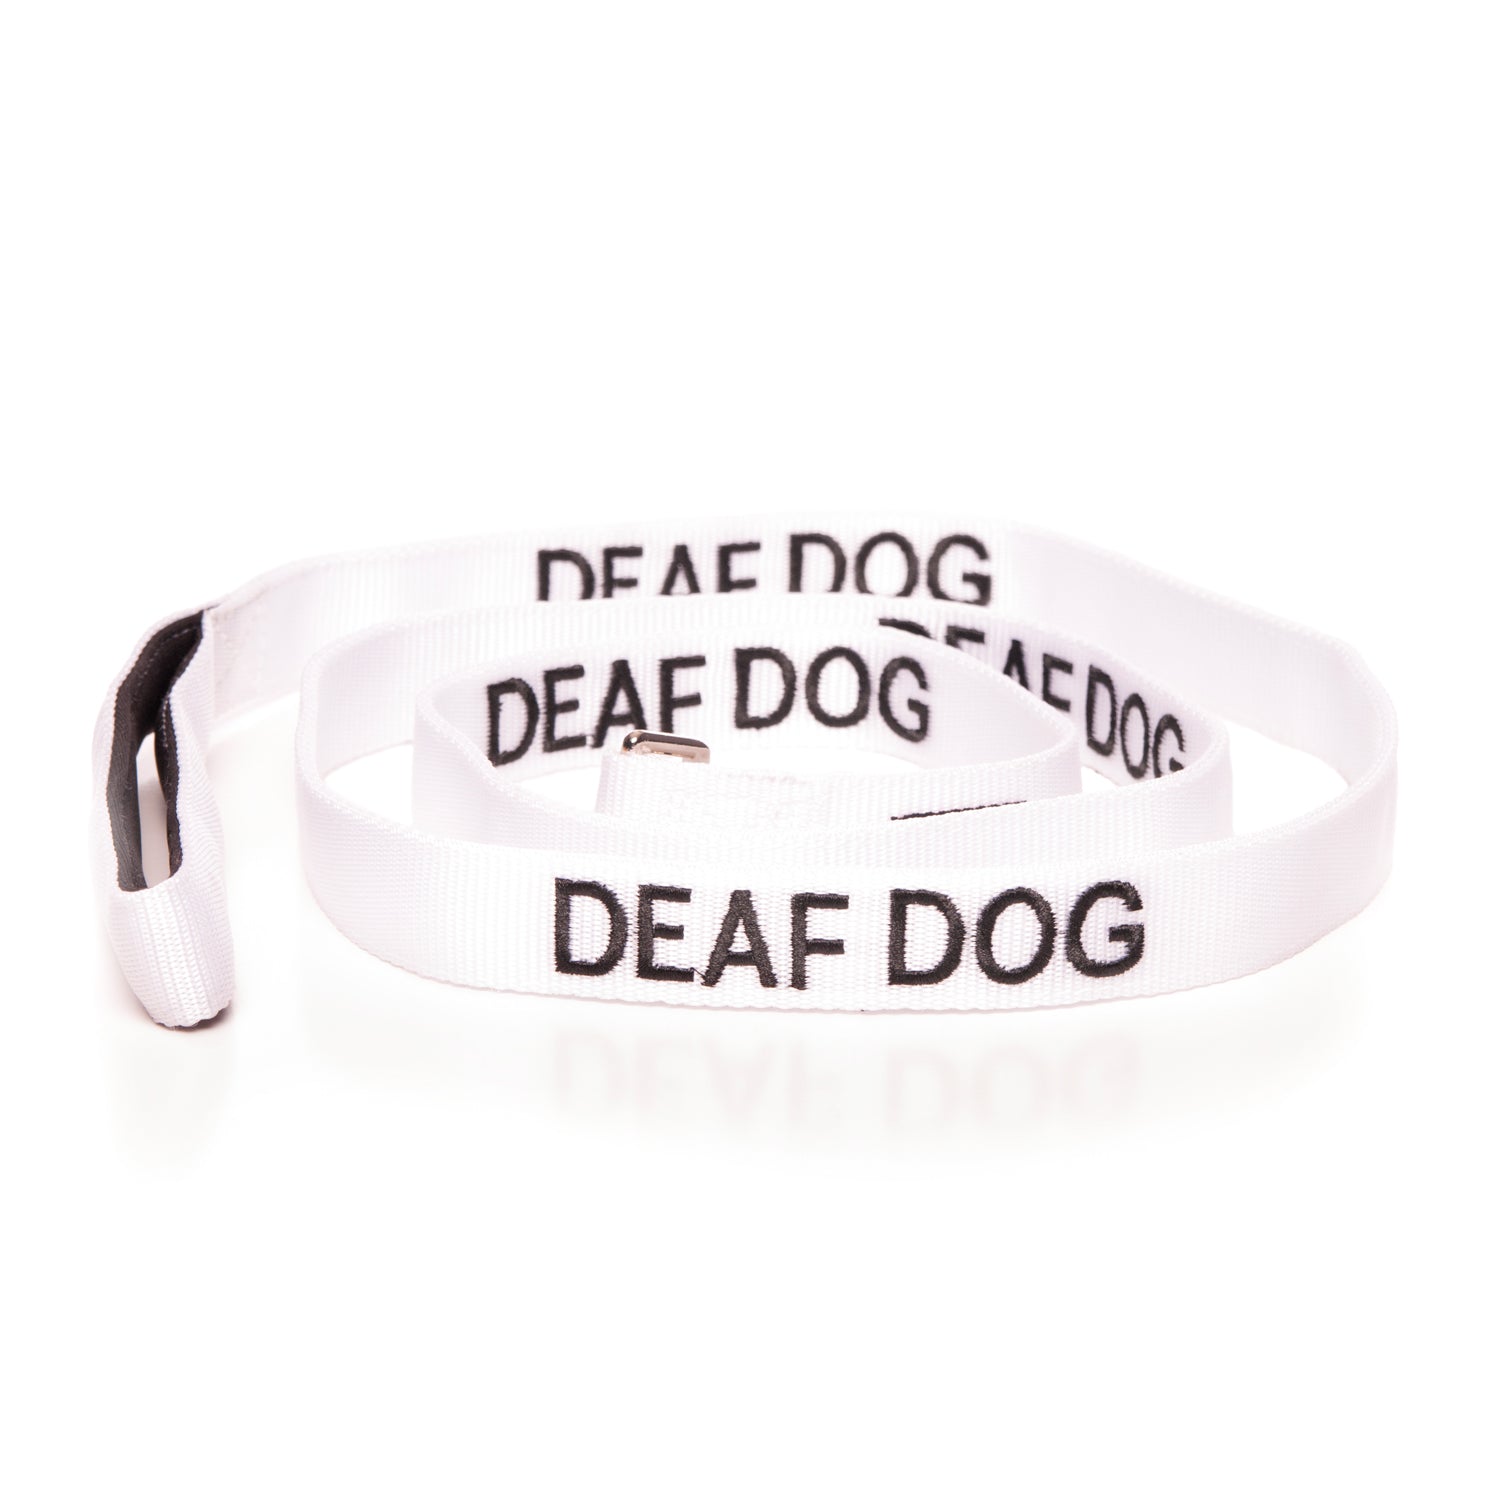 Dexil Friendly Dog Collars DEAF DOG Long 180cm (6ft) Lead